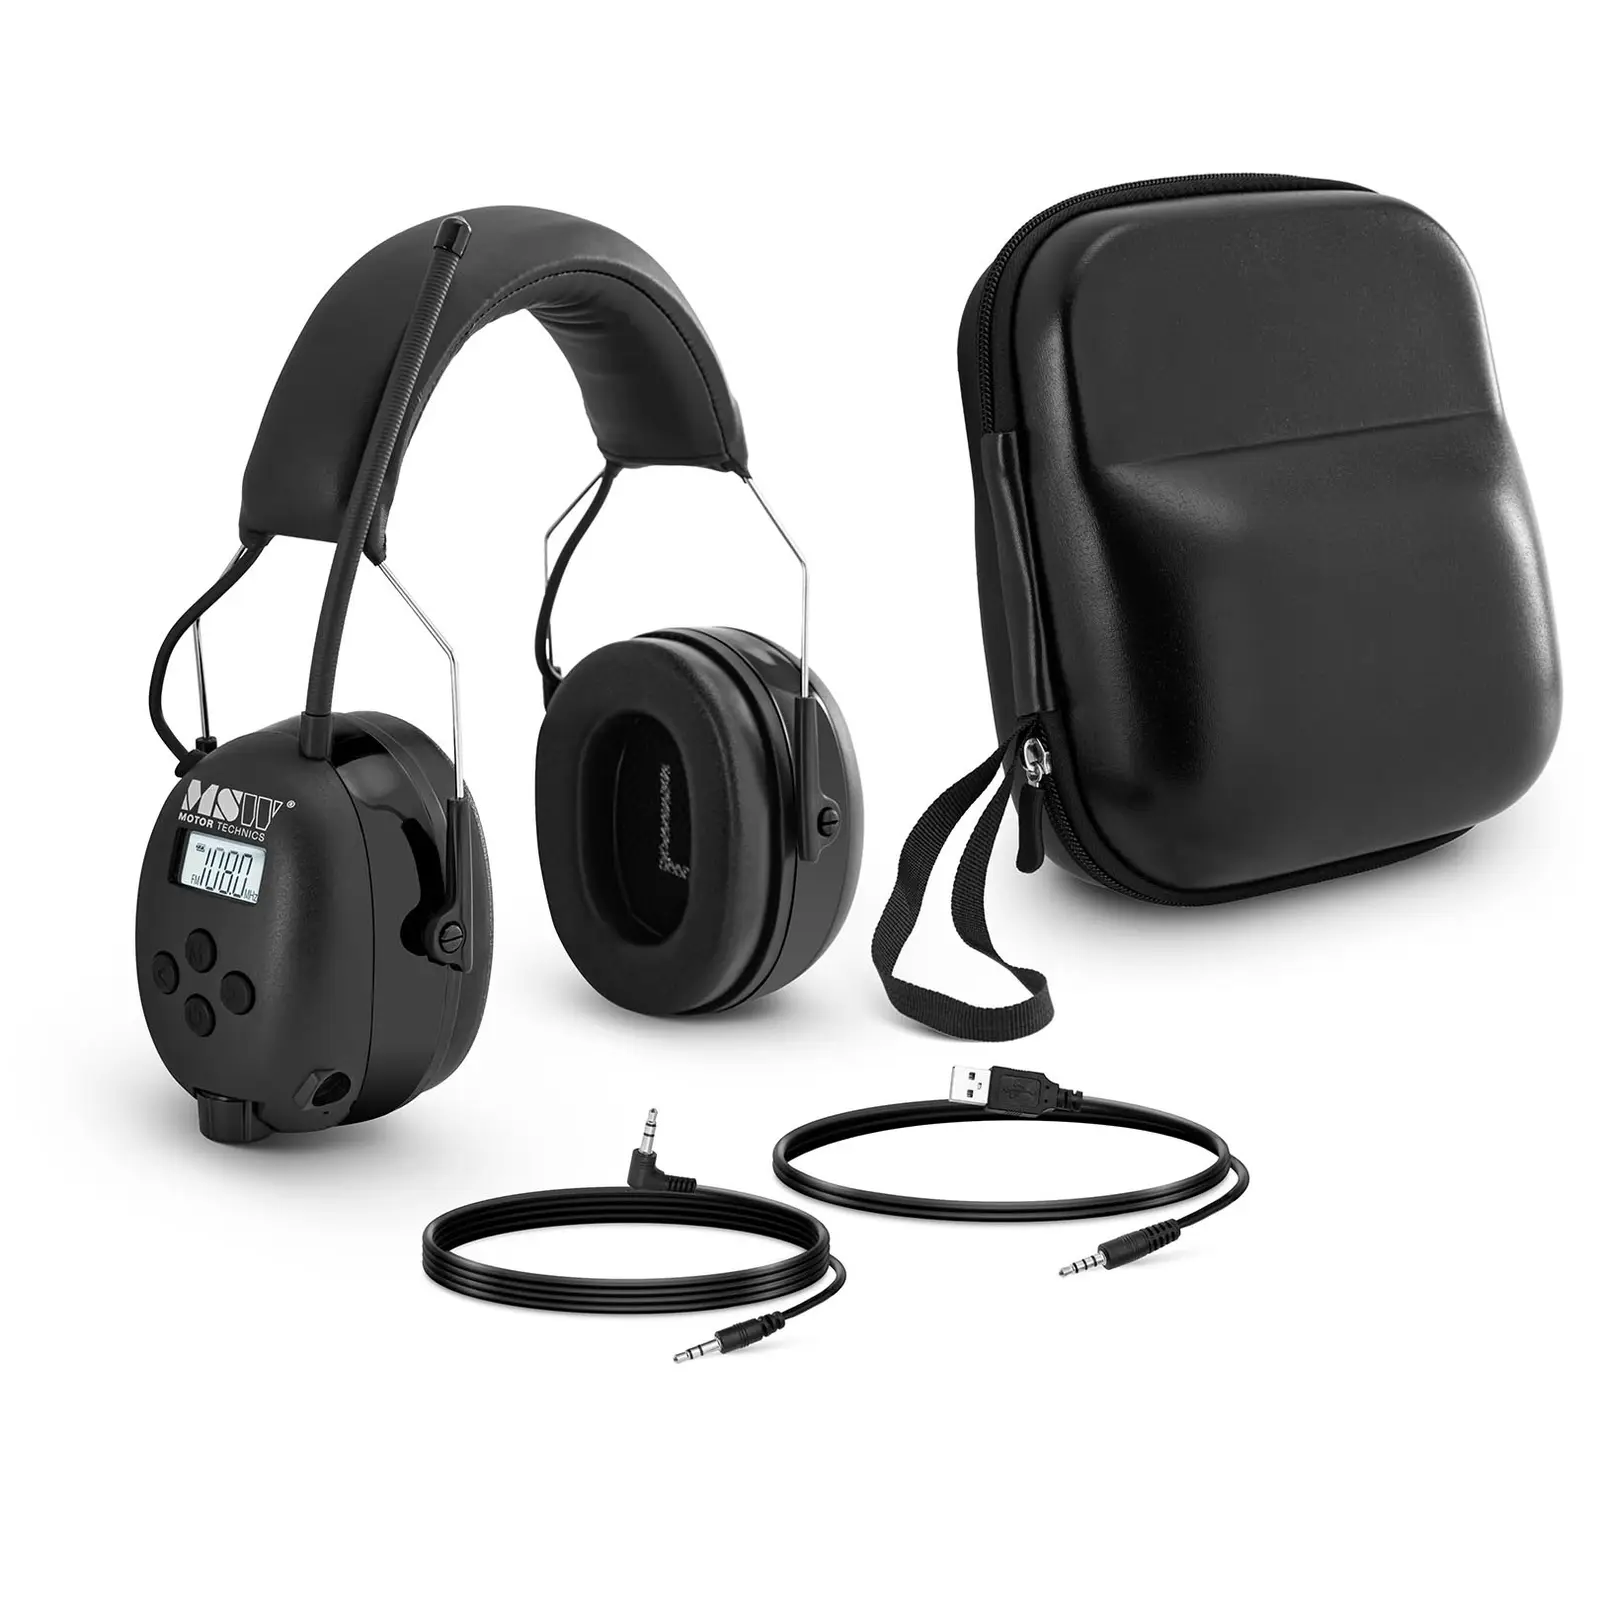 Bluetooth slušalice s poništavanjem buke - mikrofon - LCD zaslon - punjiva baterija - crna